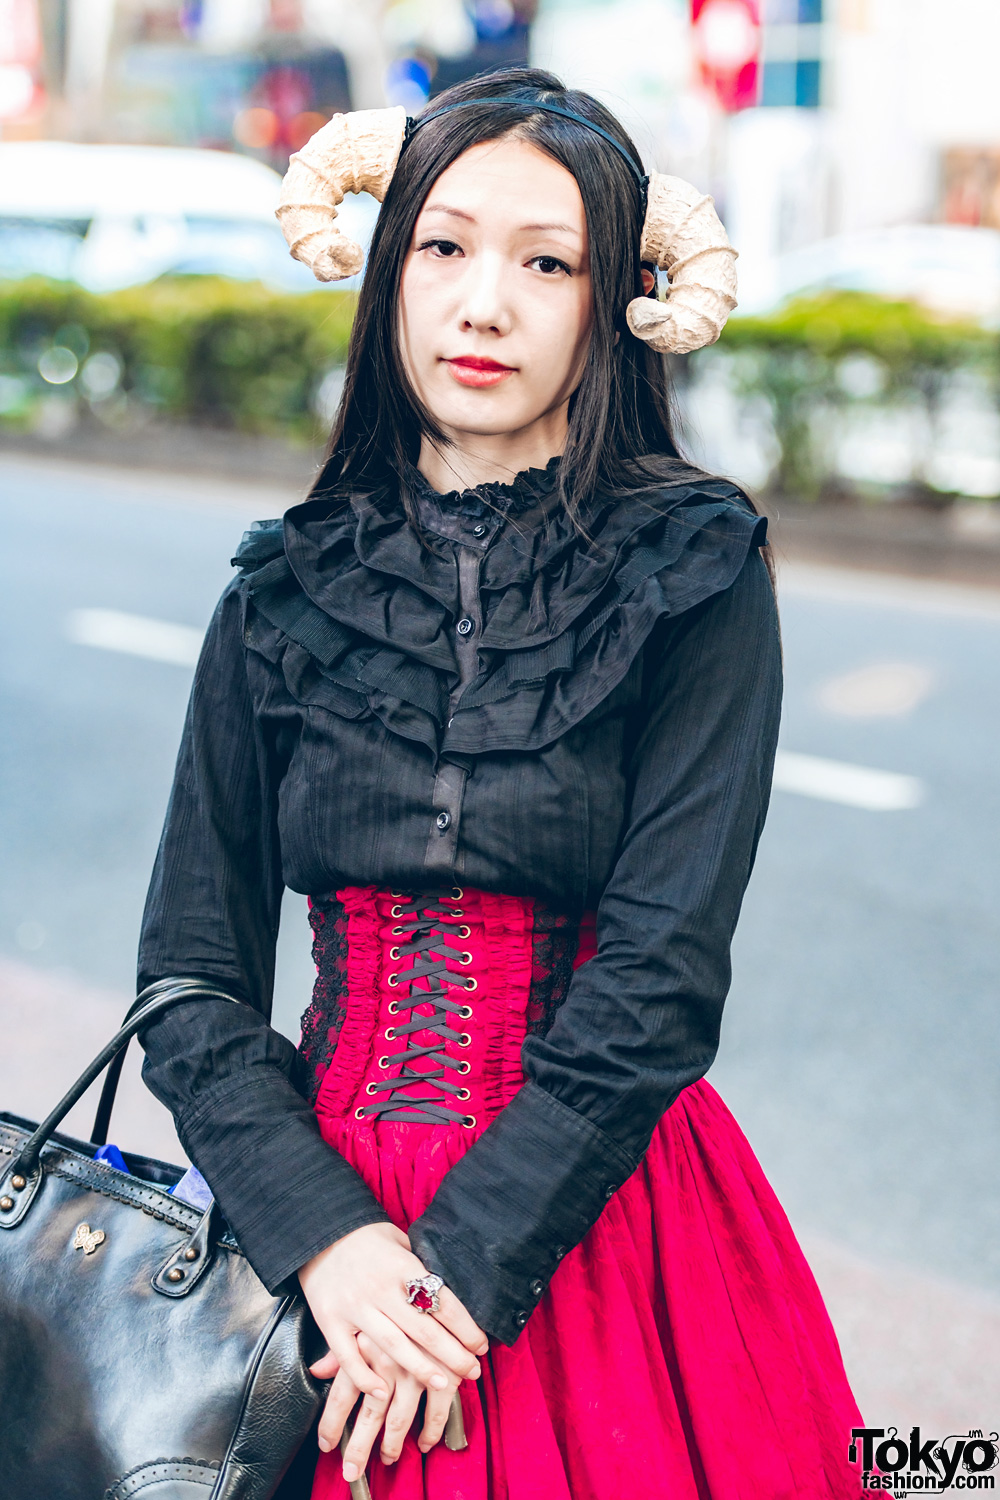 Horned Harajuku Girl in Gothic Lolita Fashion w/ Black 